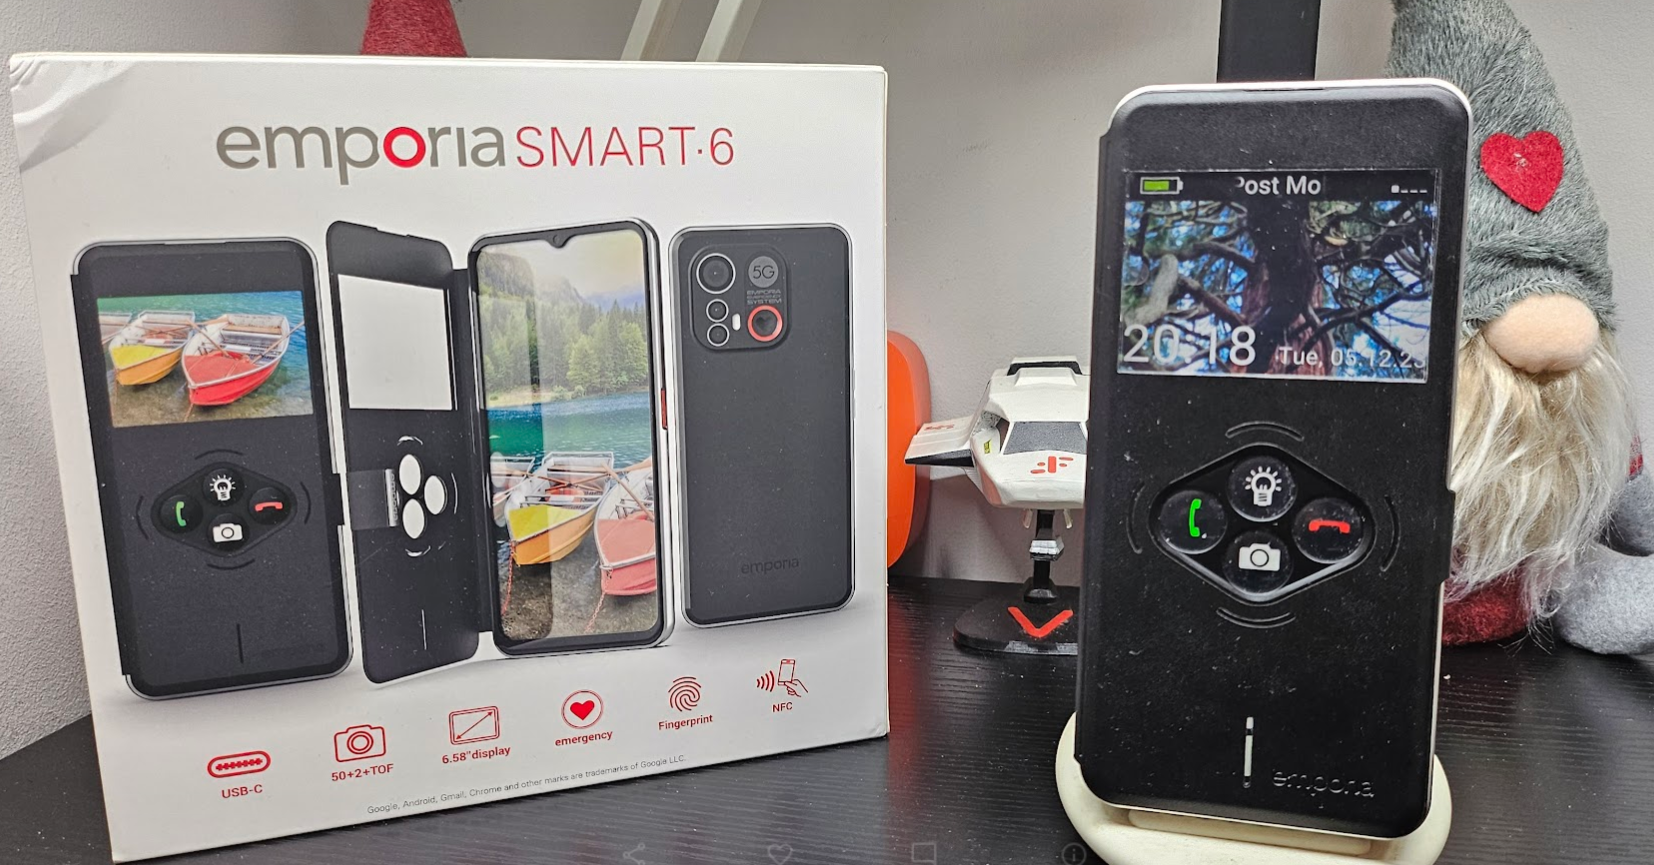 emporia SMART.6 user-friendly 5G smartphone - techbuzzireland